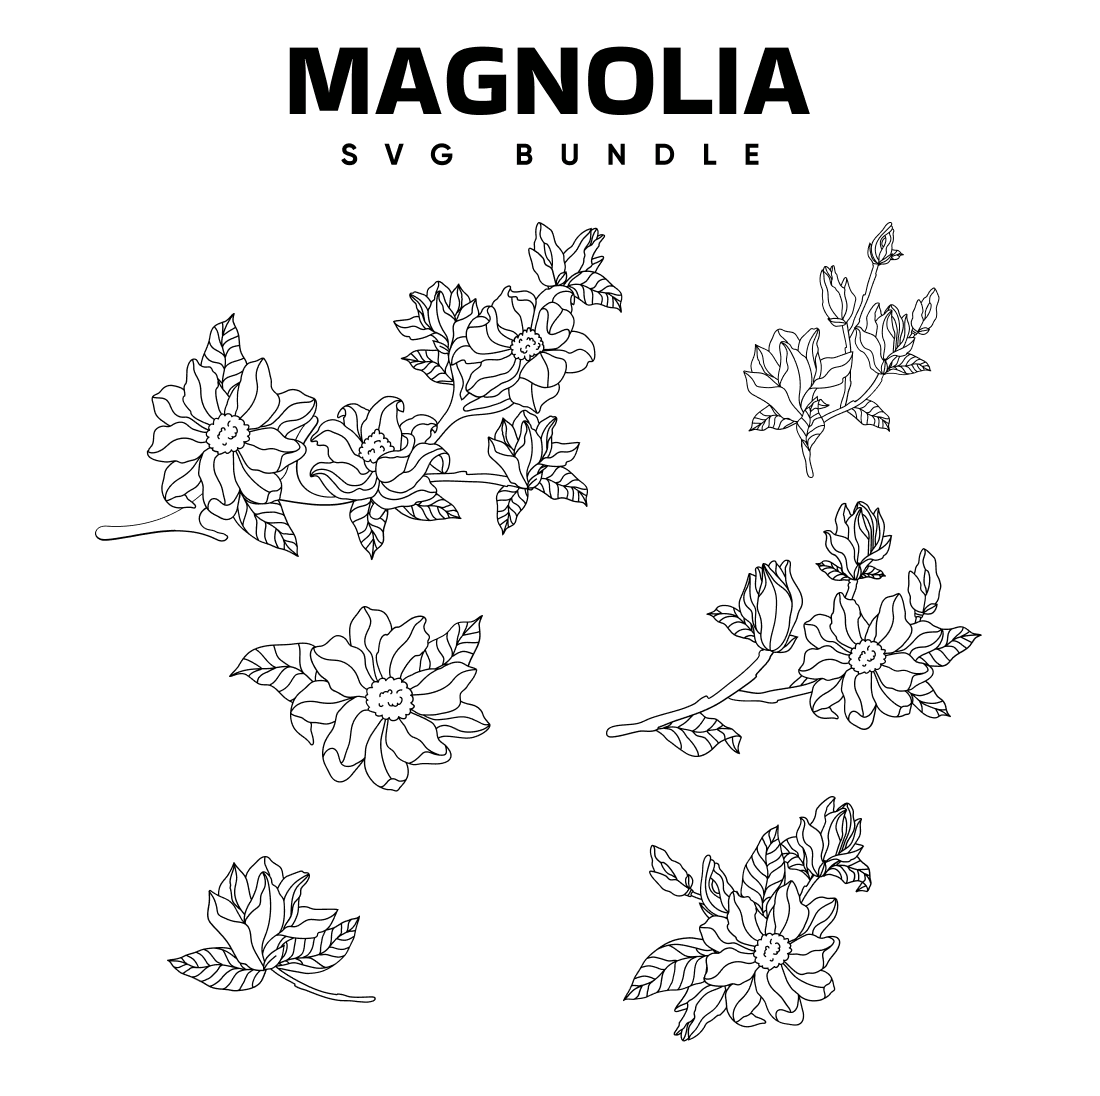 Magnolia SVG Free.